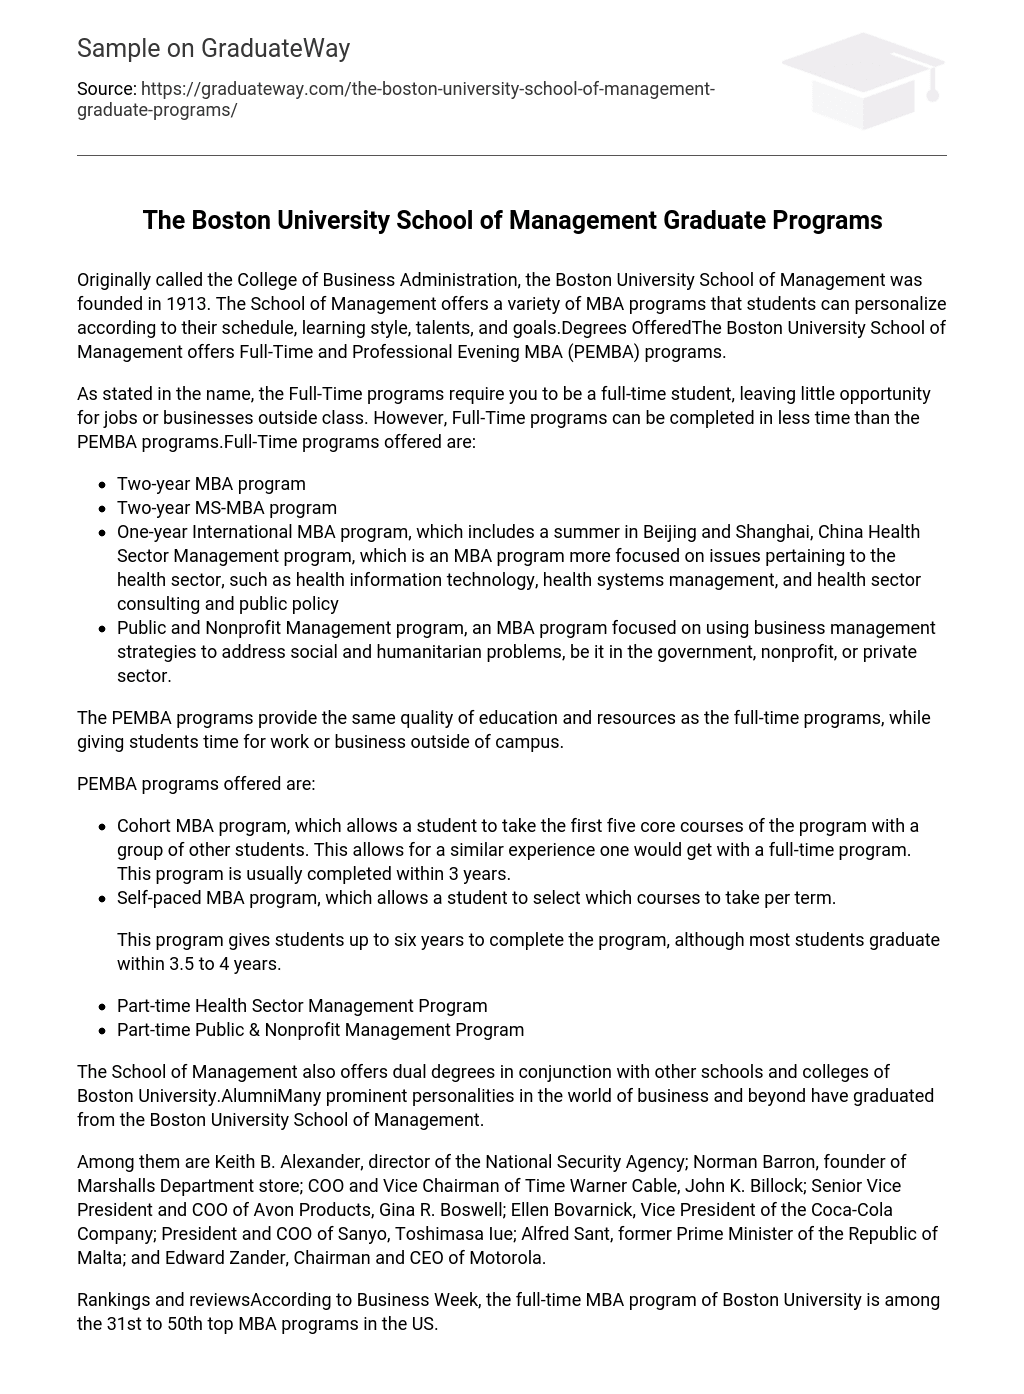 The Boston University School of Management Graduate Programs